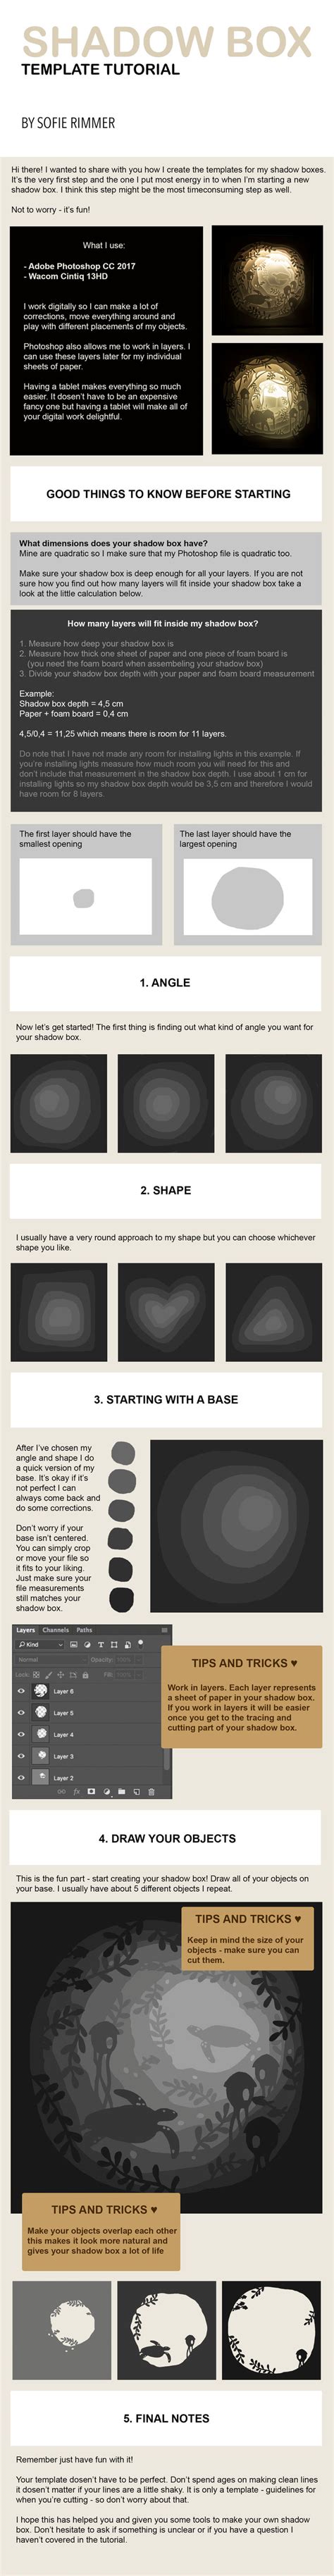 shadow box template tutorial  sofierimmer  deviantart